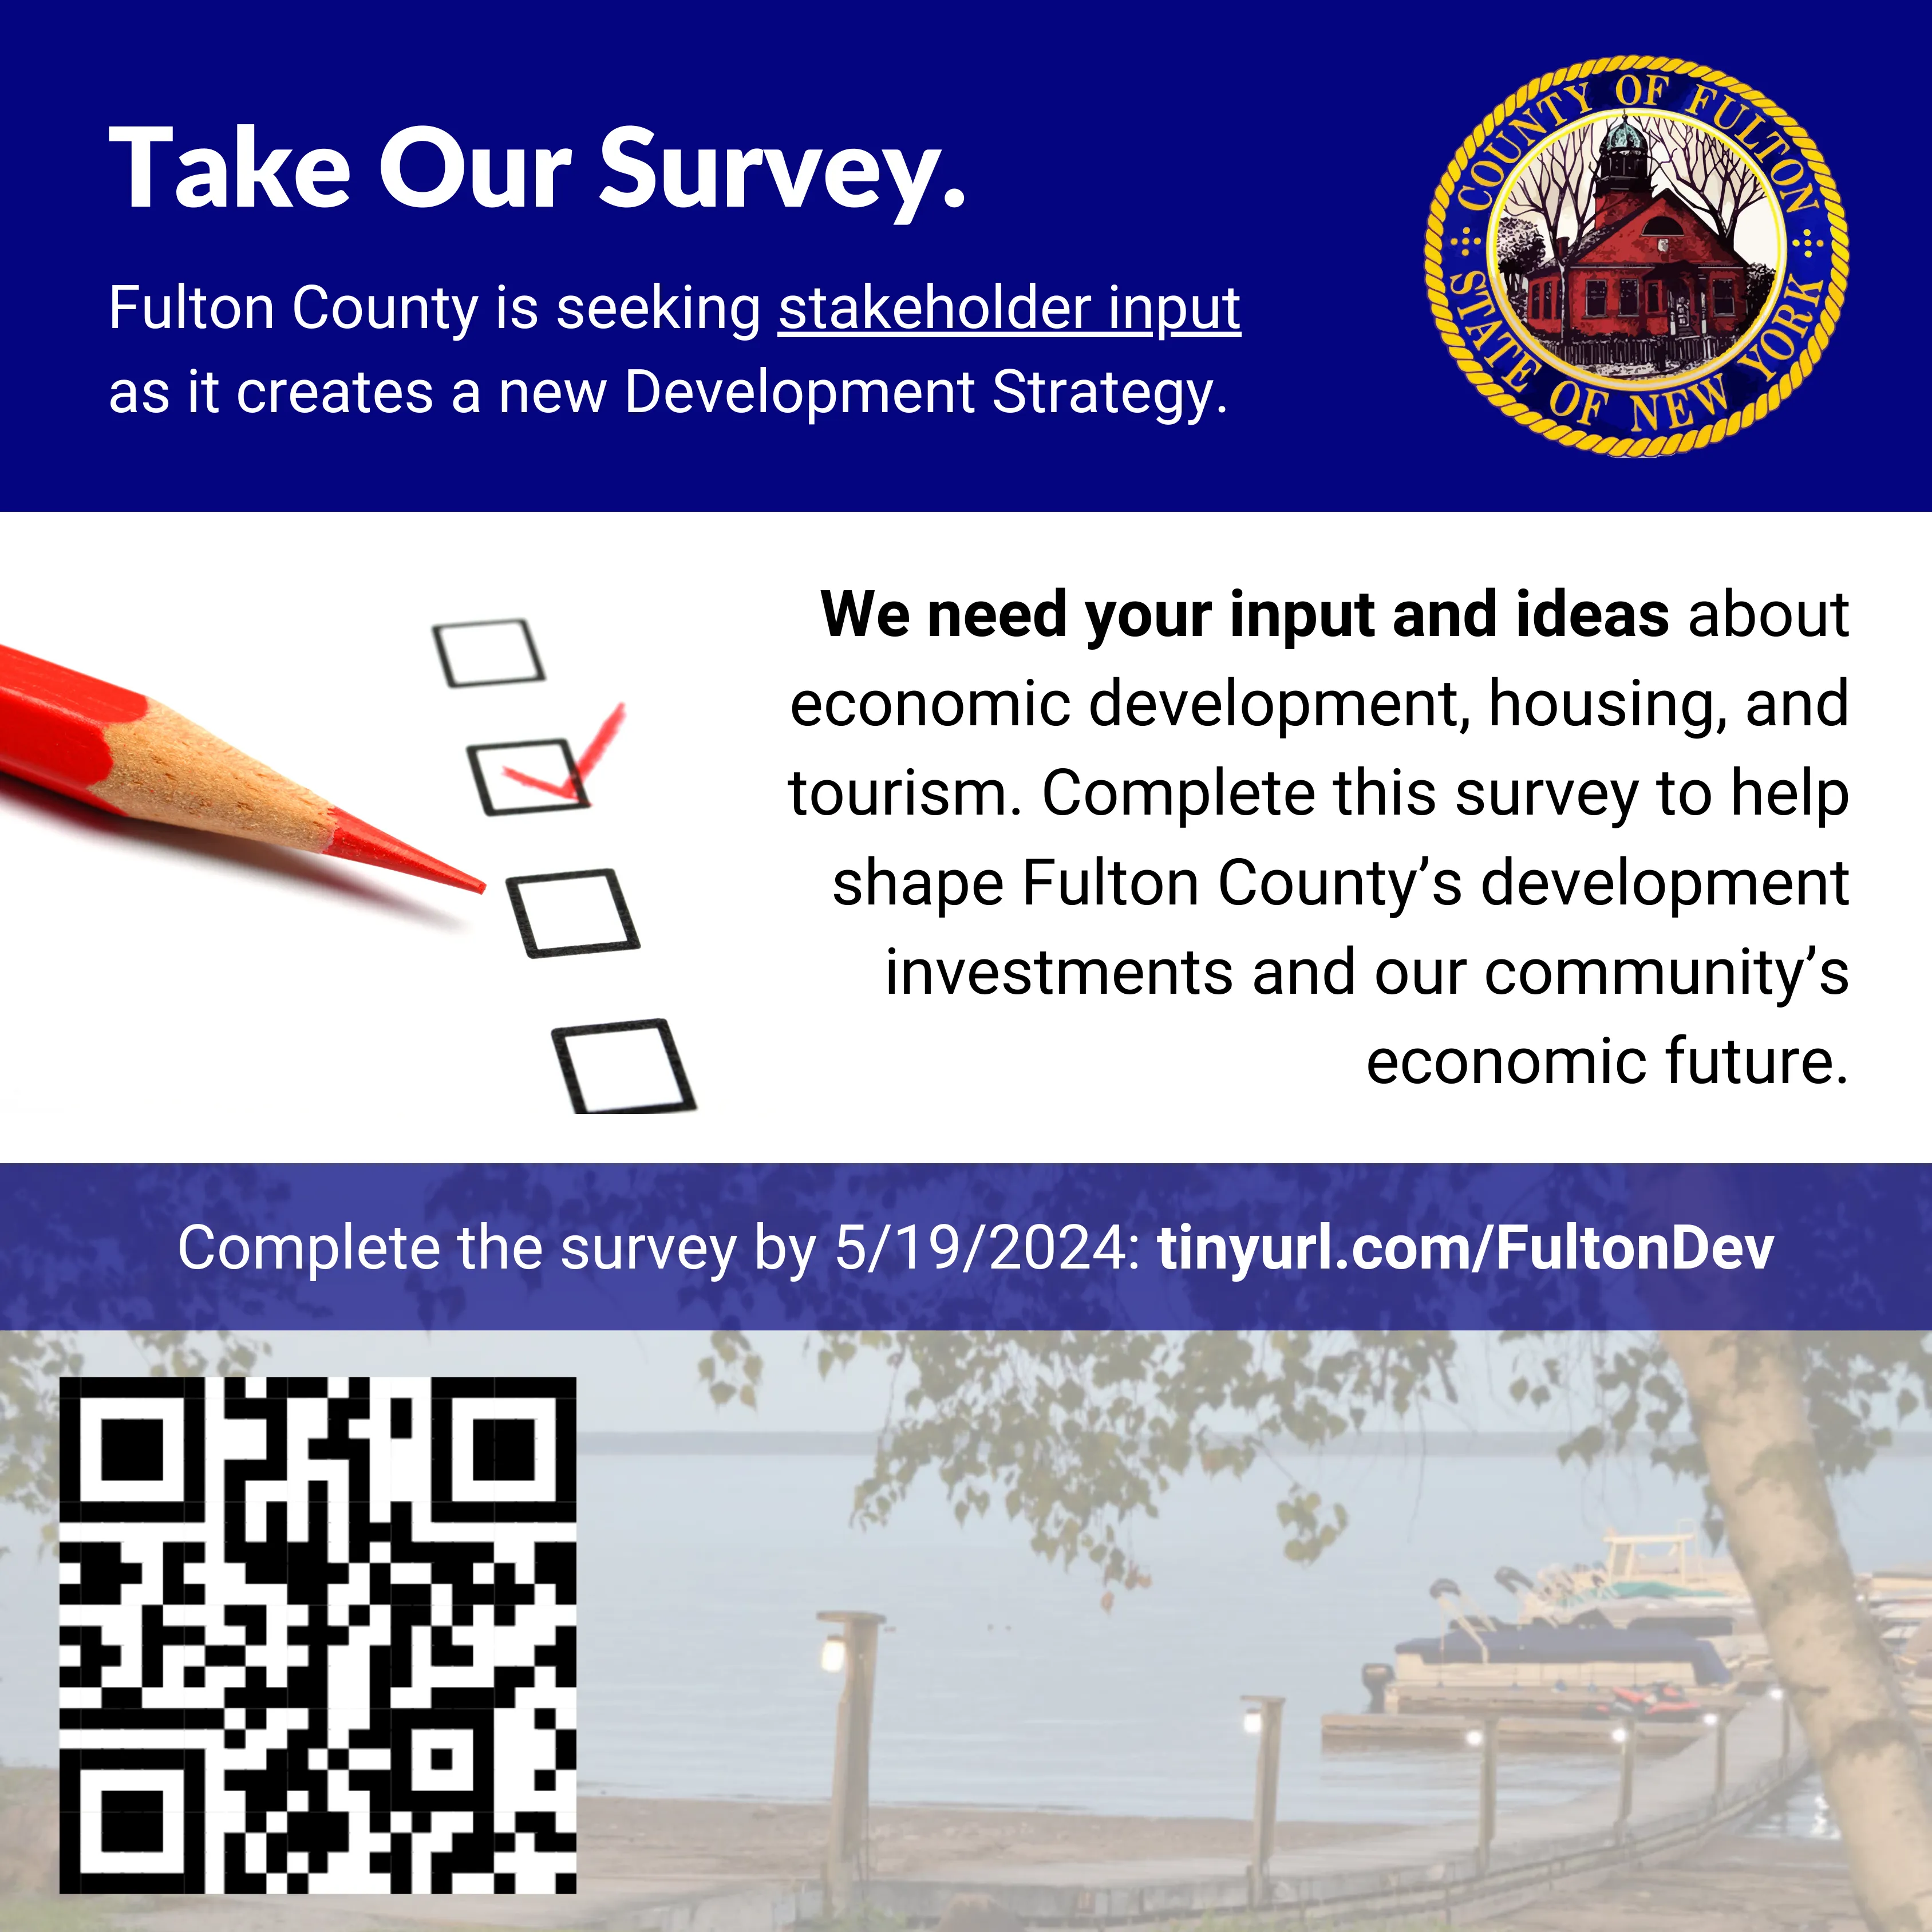 Fill out our Fulton County Development Survey at https://www.surveymonkey.com/r/FKX9S5N